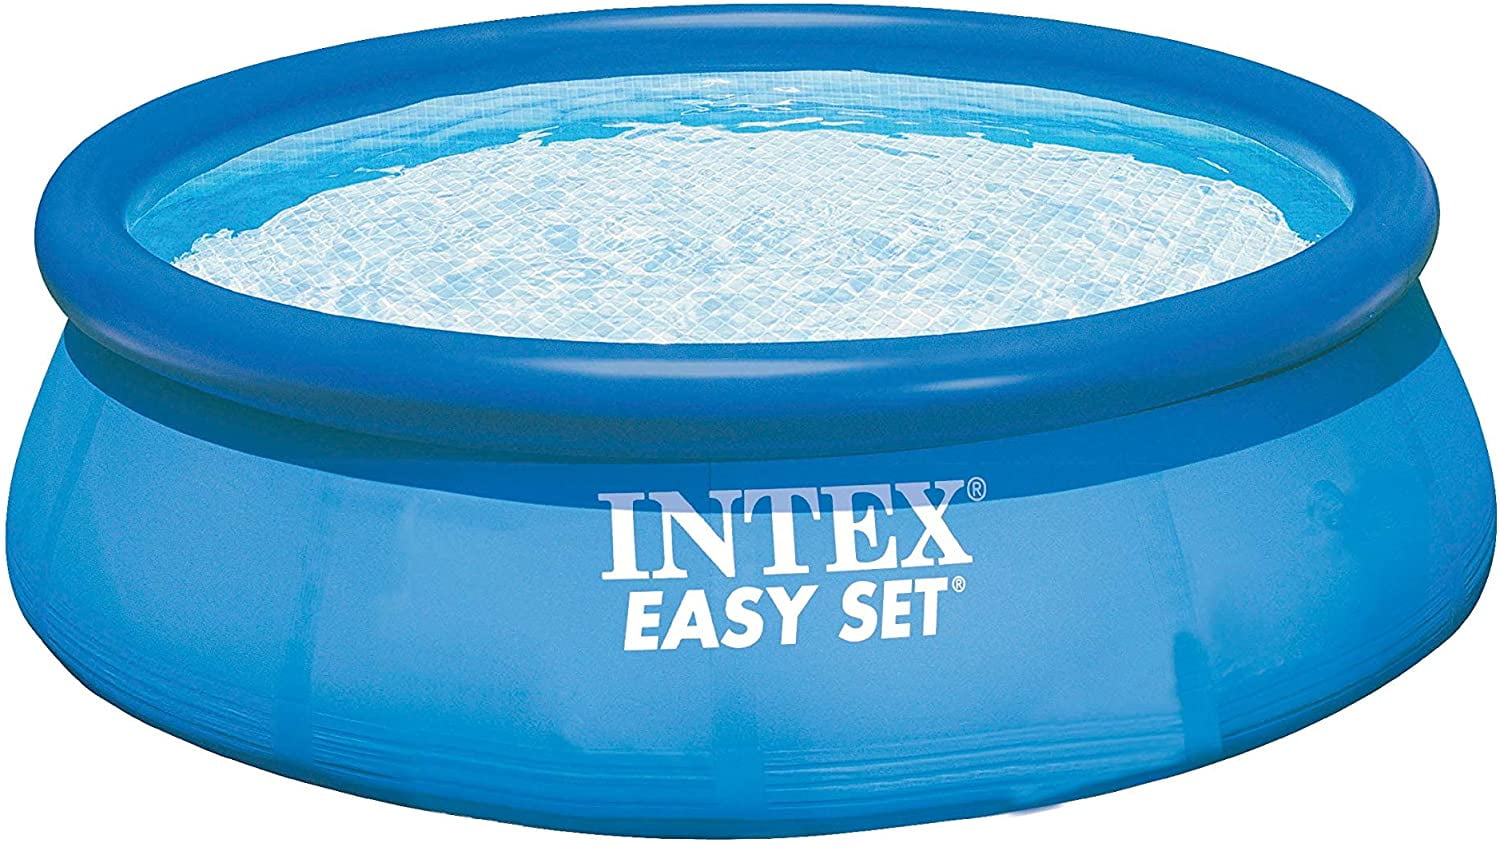 Medalje klinge jungle Intex Swimming Pool- Easy Set, 8ft.x30in. - Walmart.com